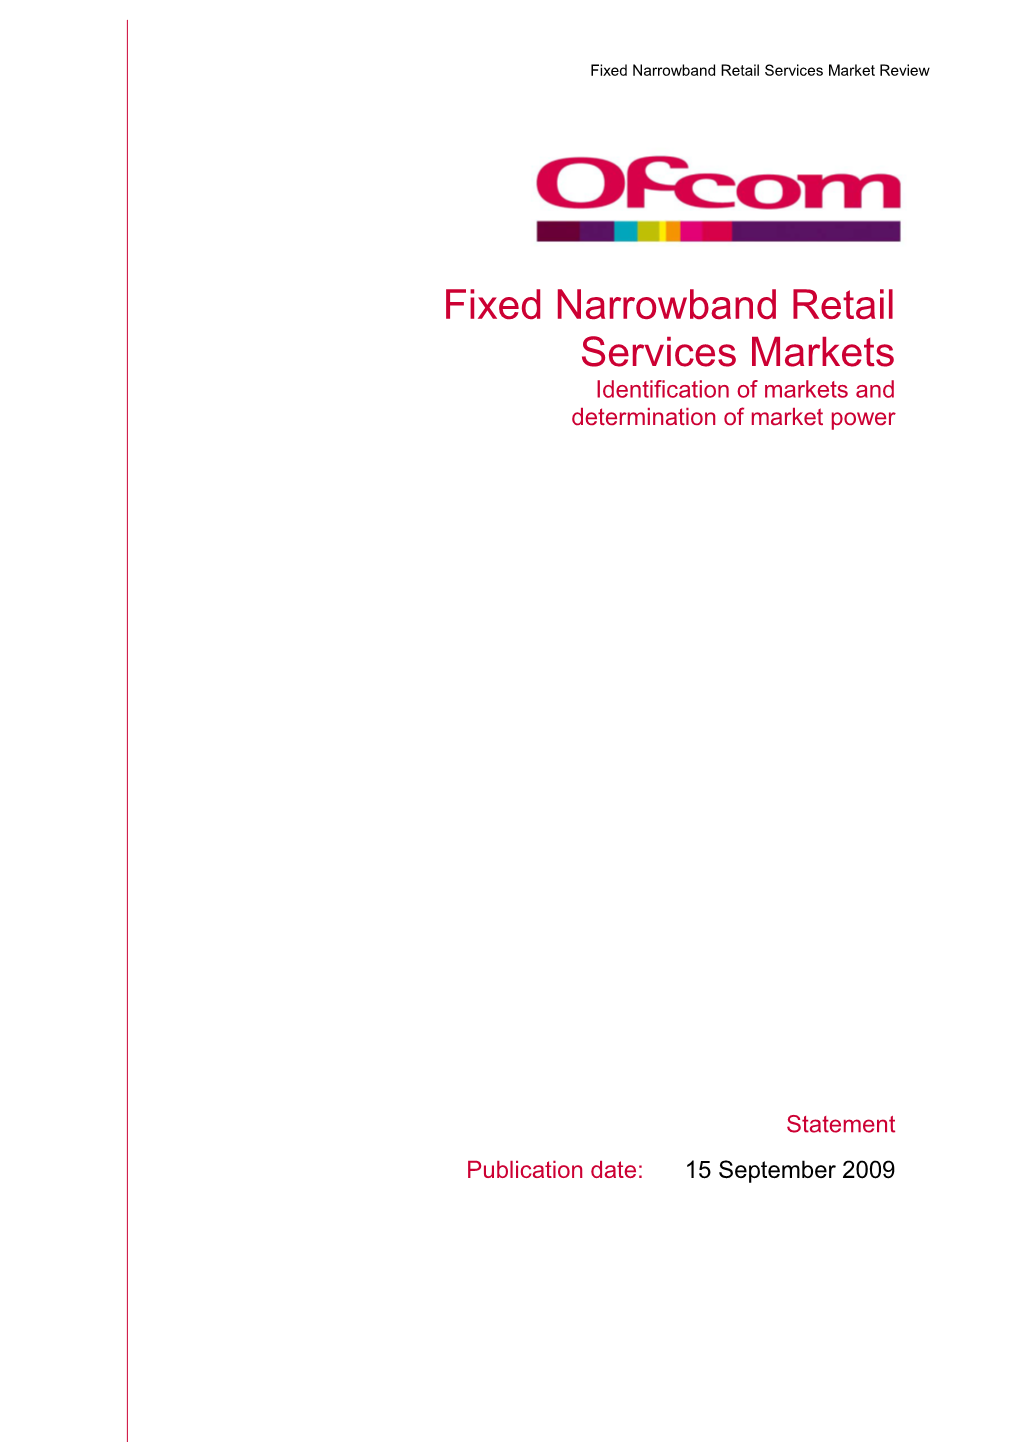 Fixed Narrowband Retail Services Markets Identification of Markets and Determination of Market Power